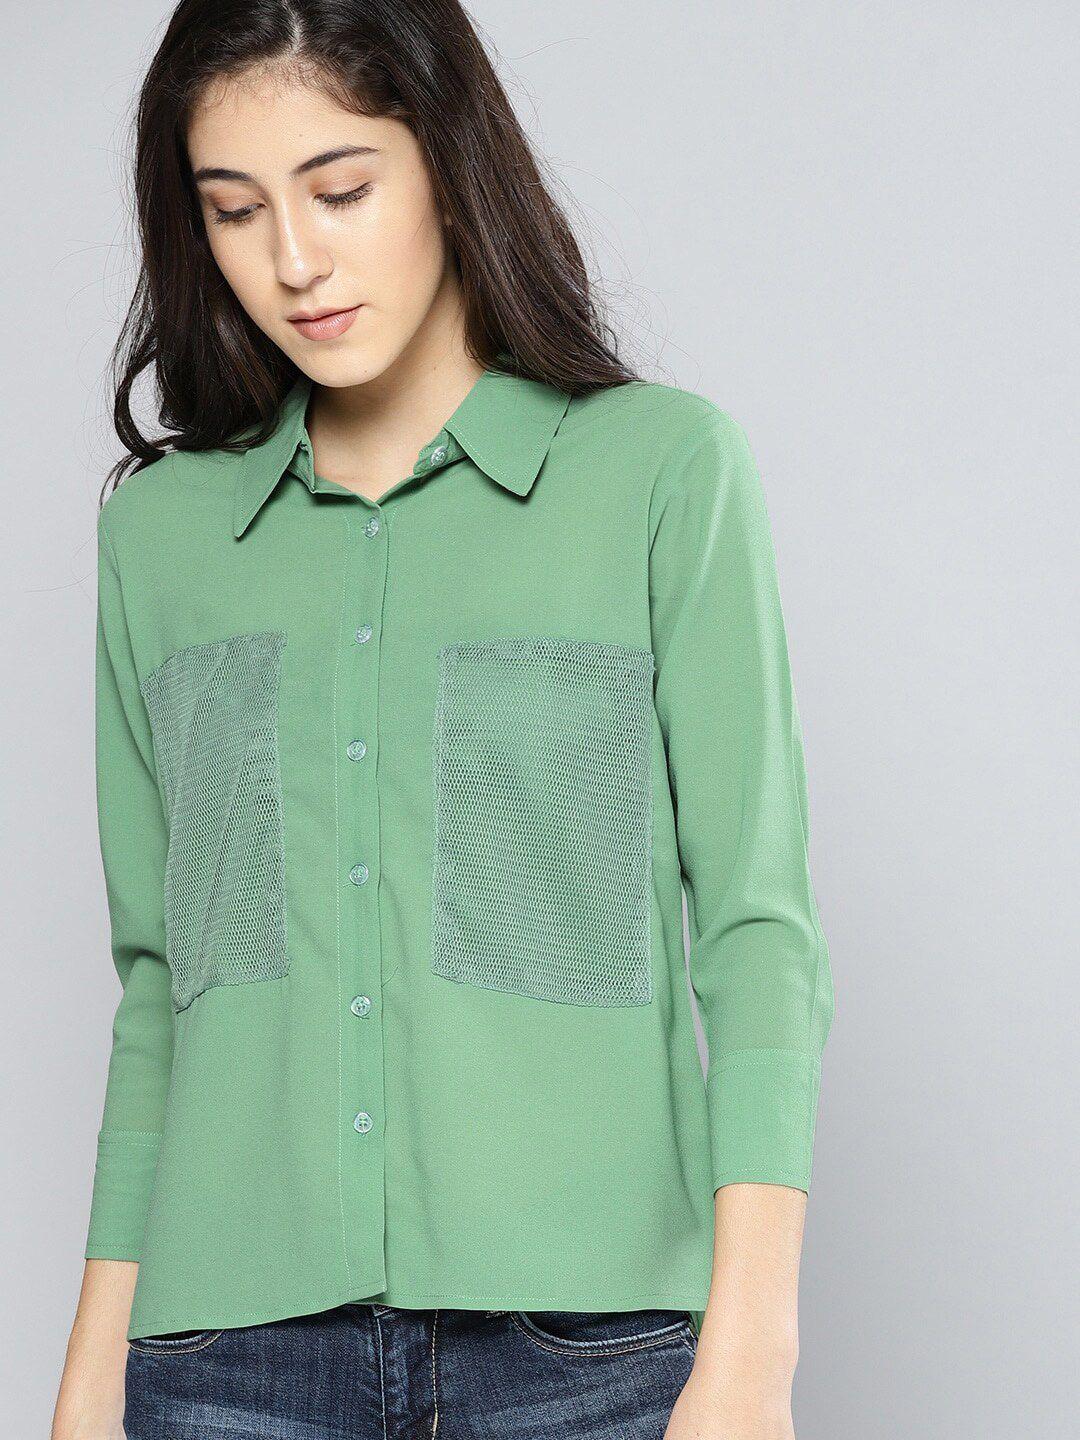 mast & harbour green spread collar opaque casual shirt